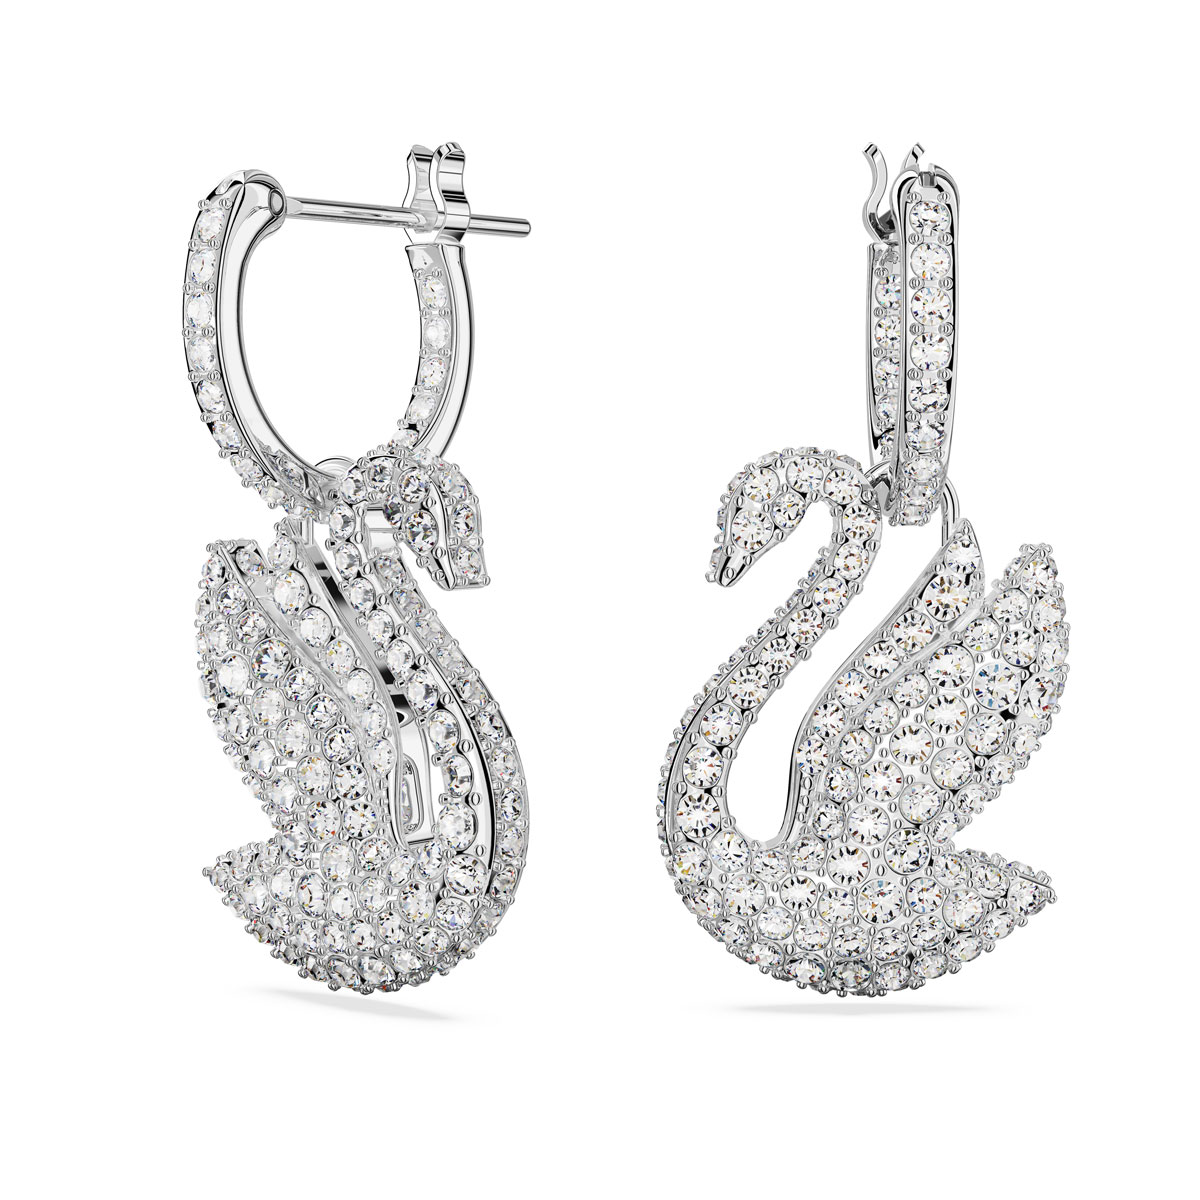 Swarovski Jewelry Iconic Swan, Pierced Earrings Hoop Earrings White, Rhodium